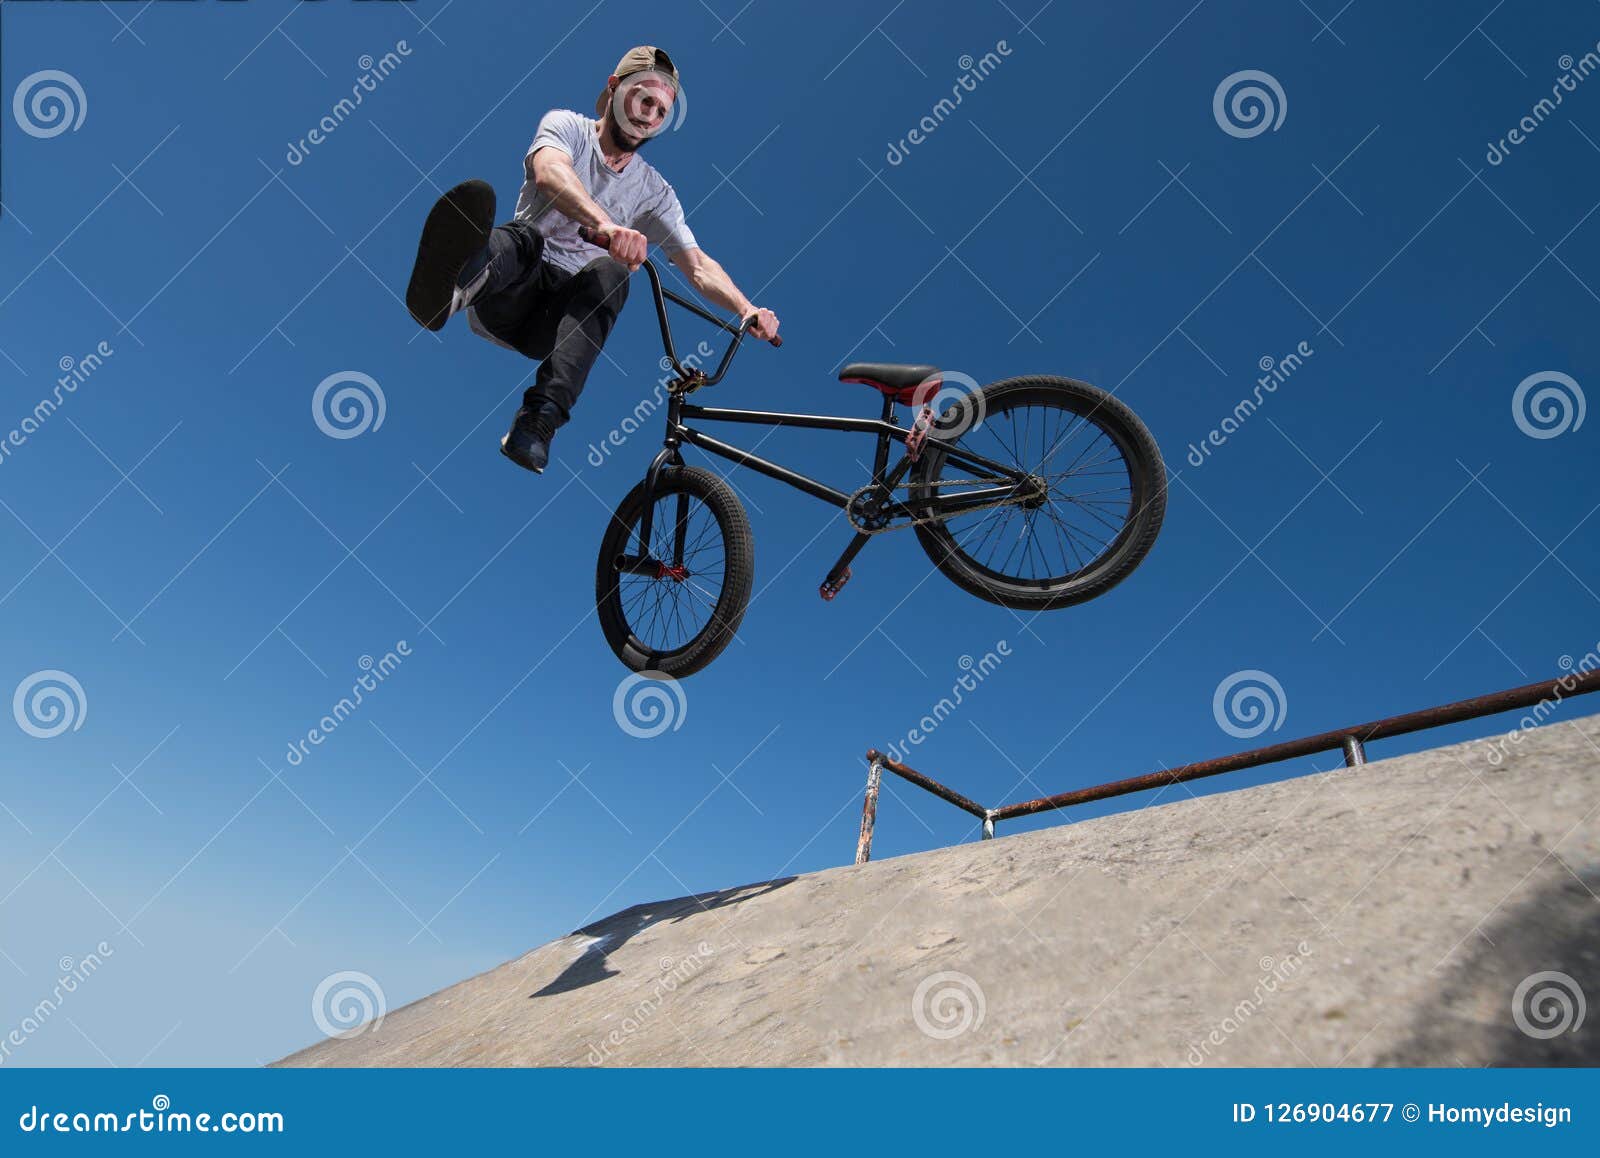 bmx bike stunt tail whip